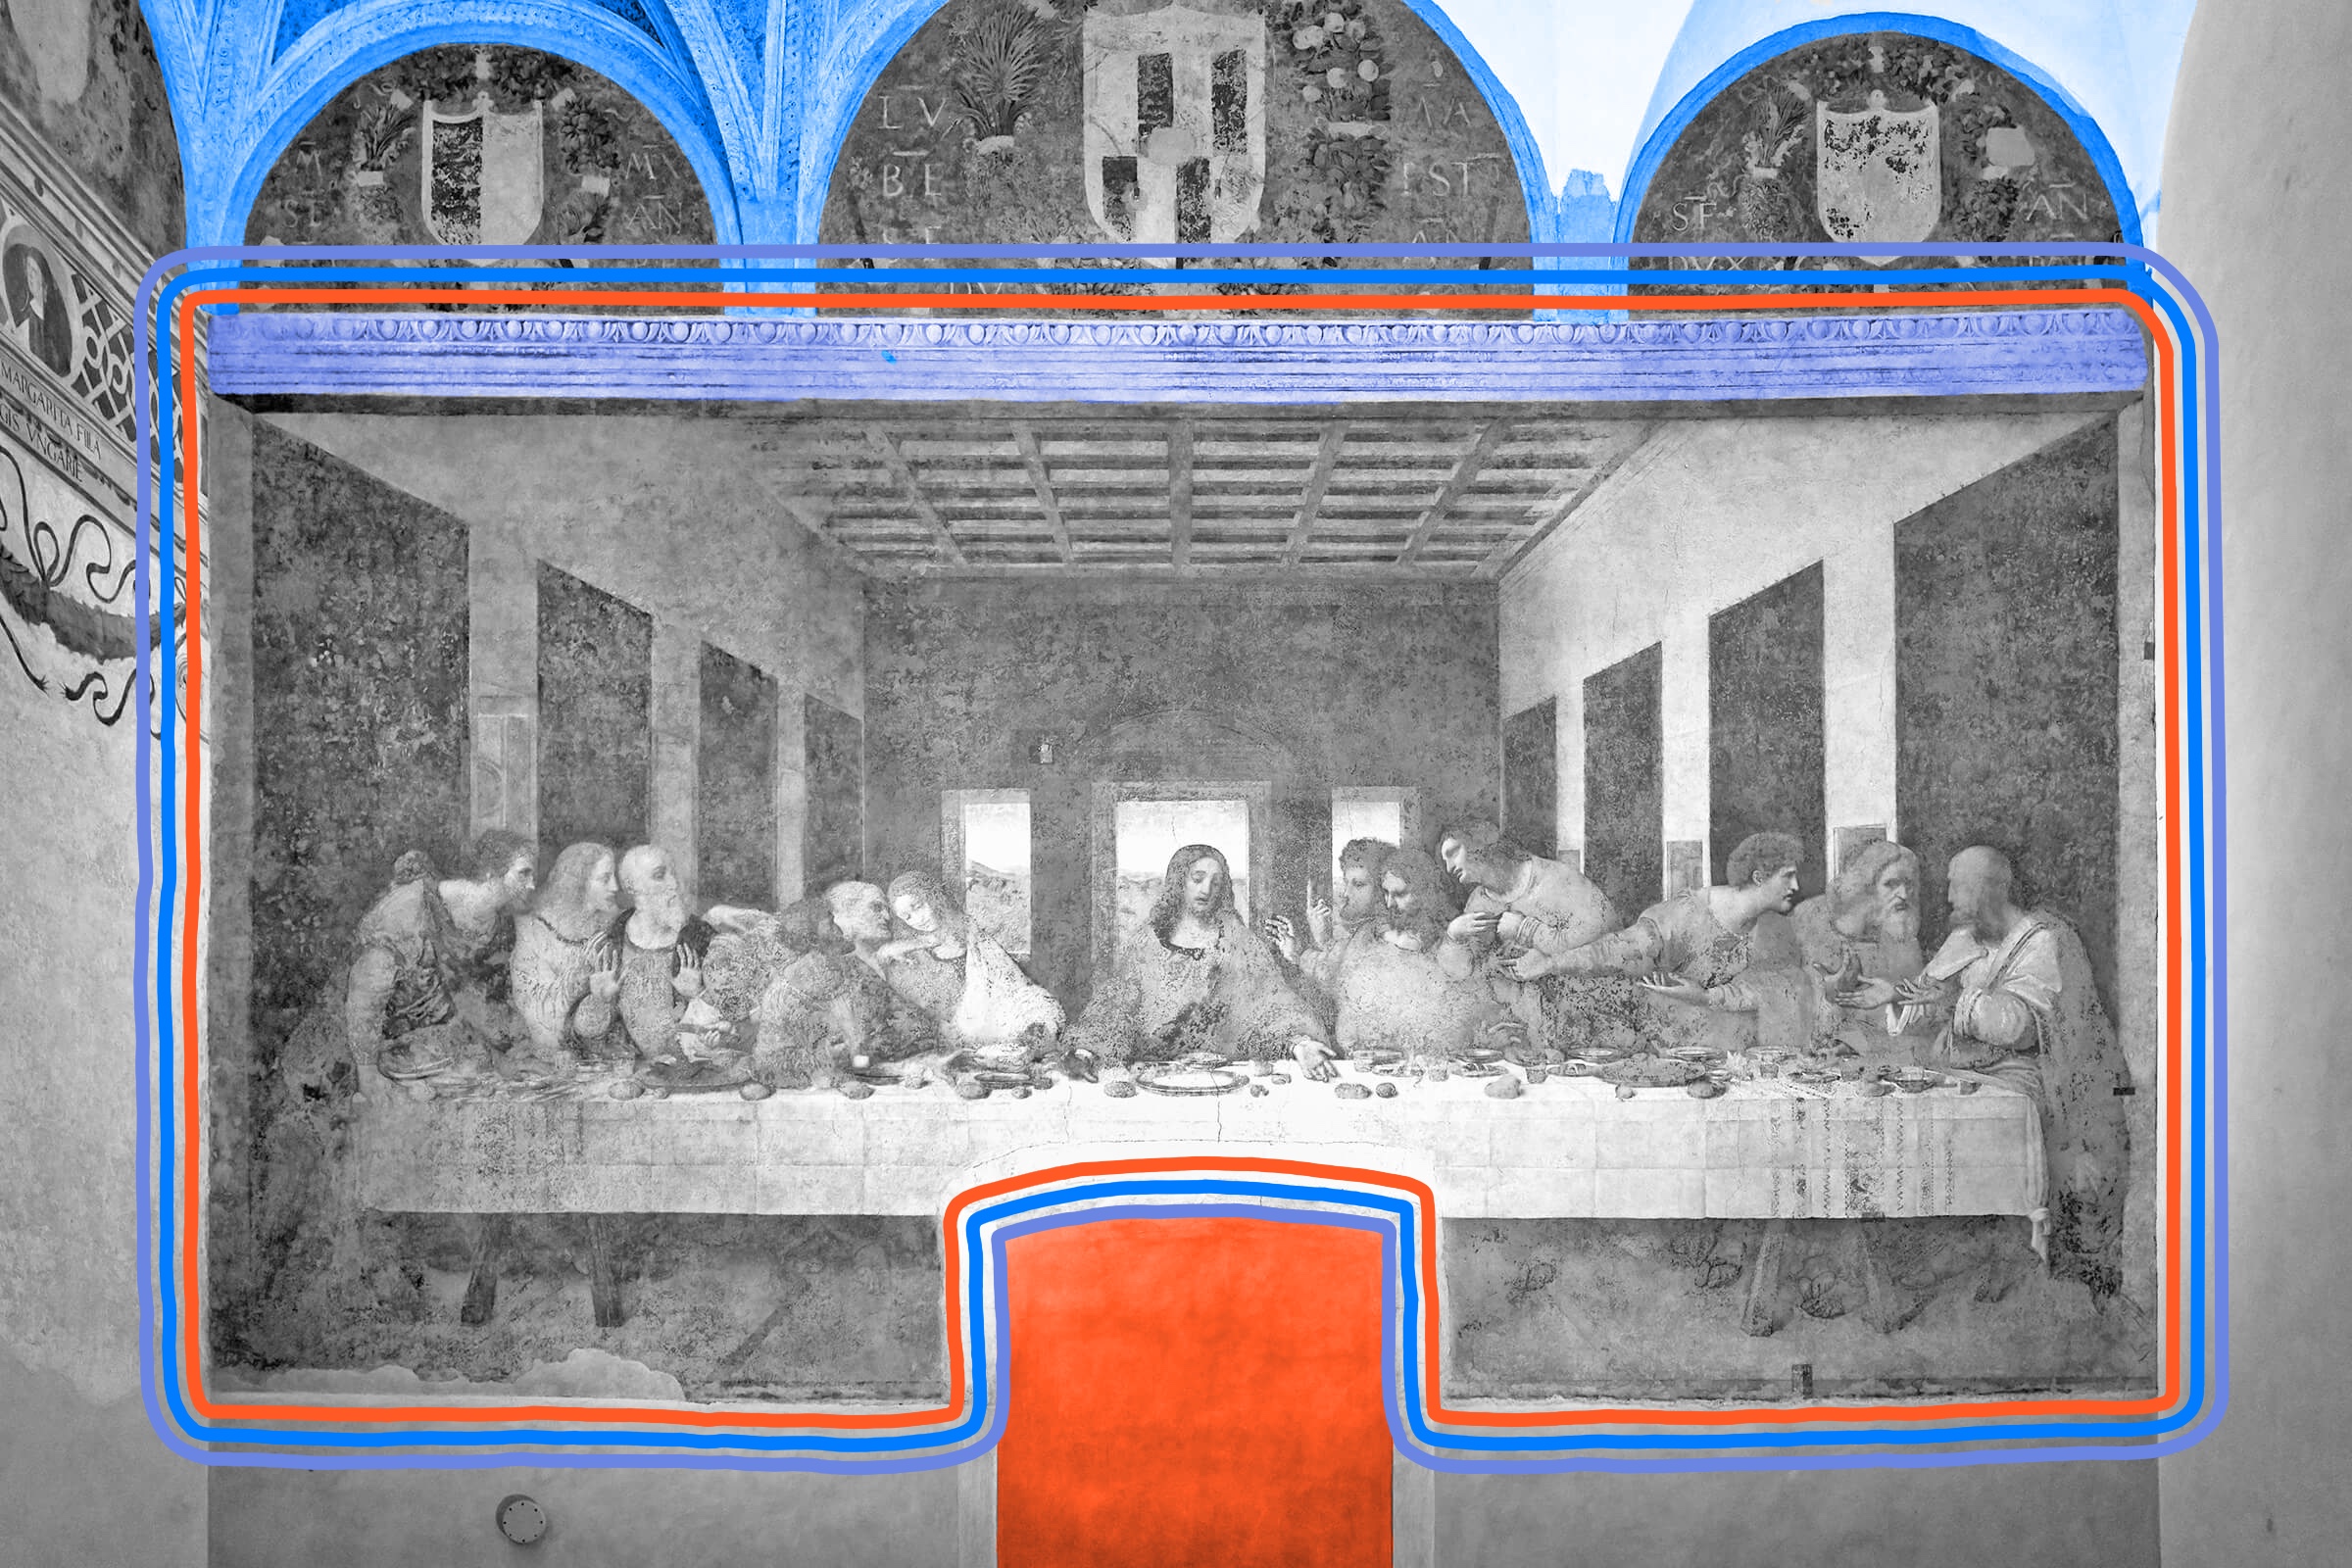 Leonardo da Vinci’s “The Last Supper” originally included Jesus’ feet.